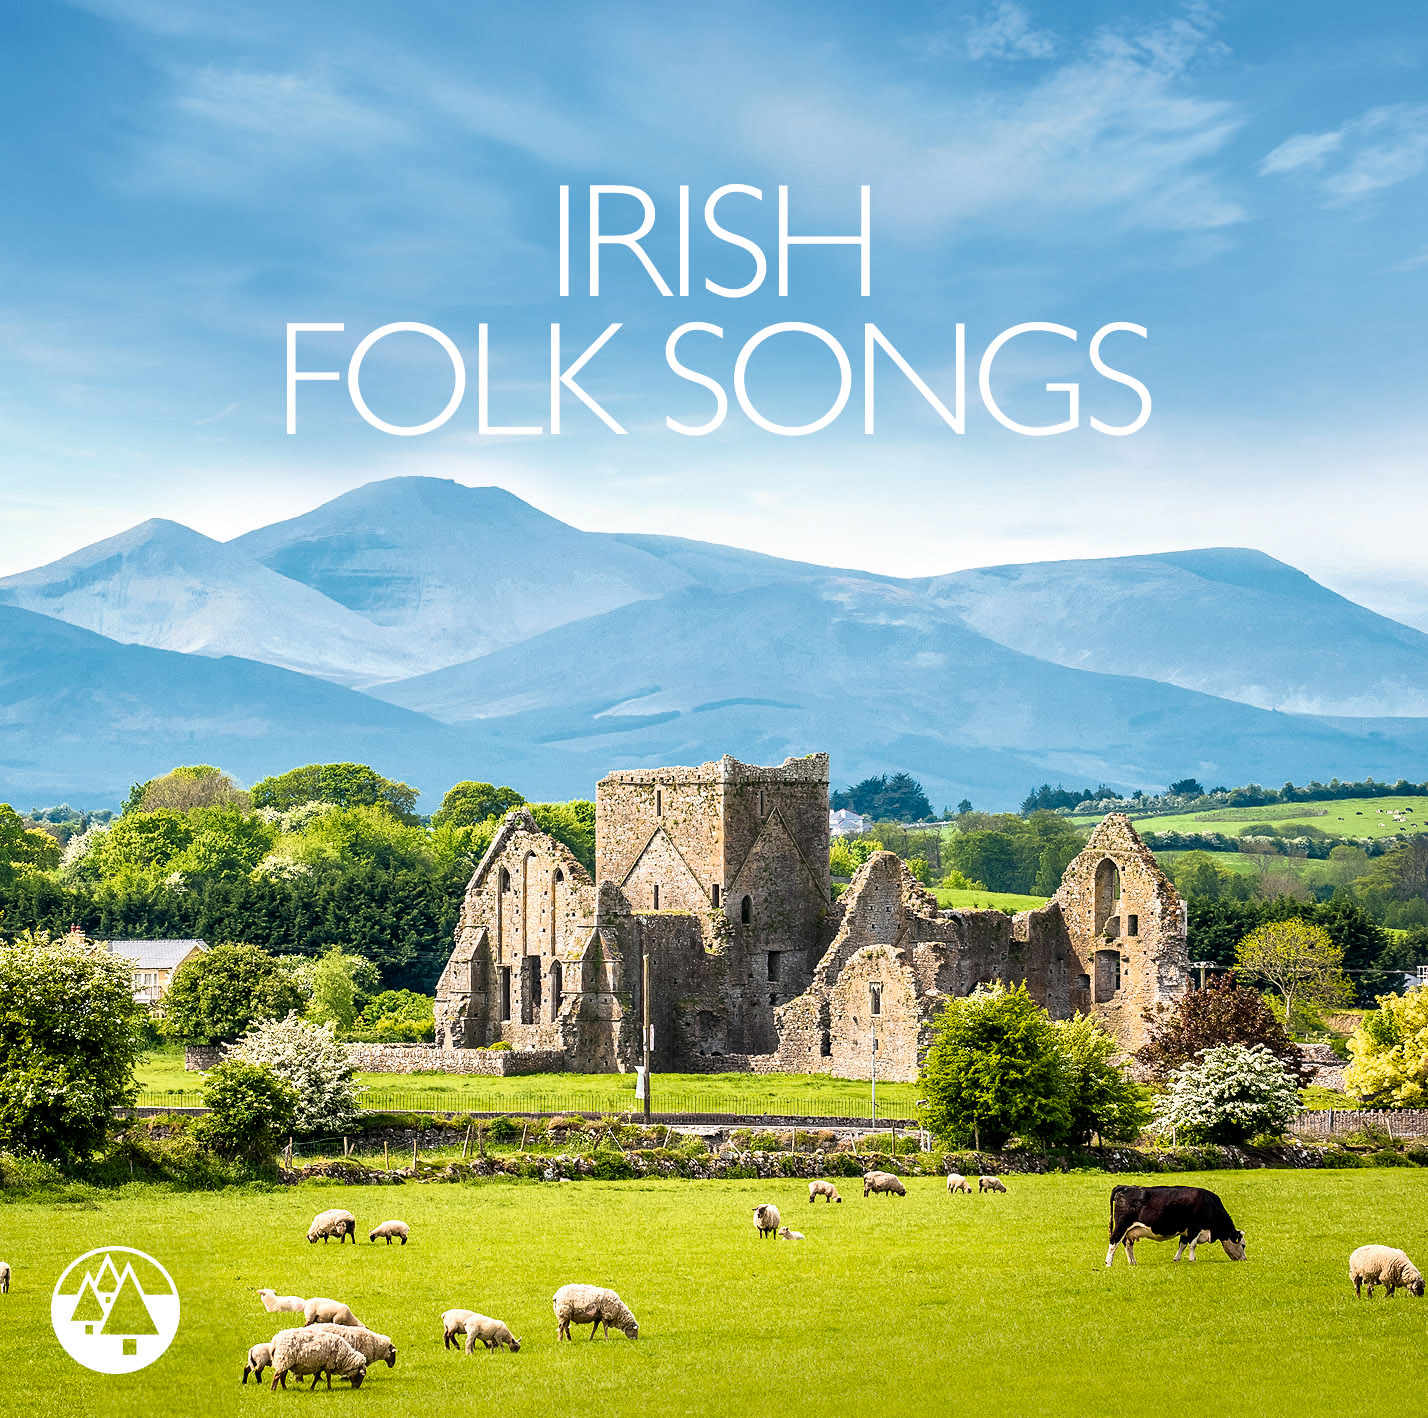 Cd irish folk songs by various artists 2cds | eBay